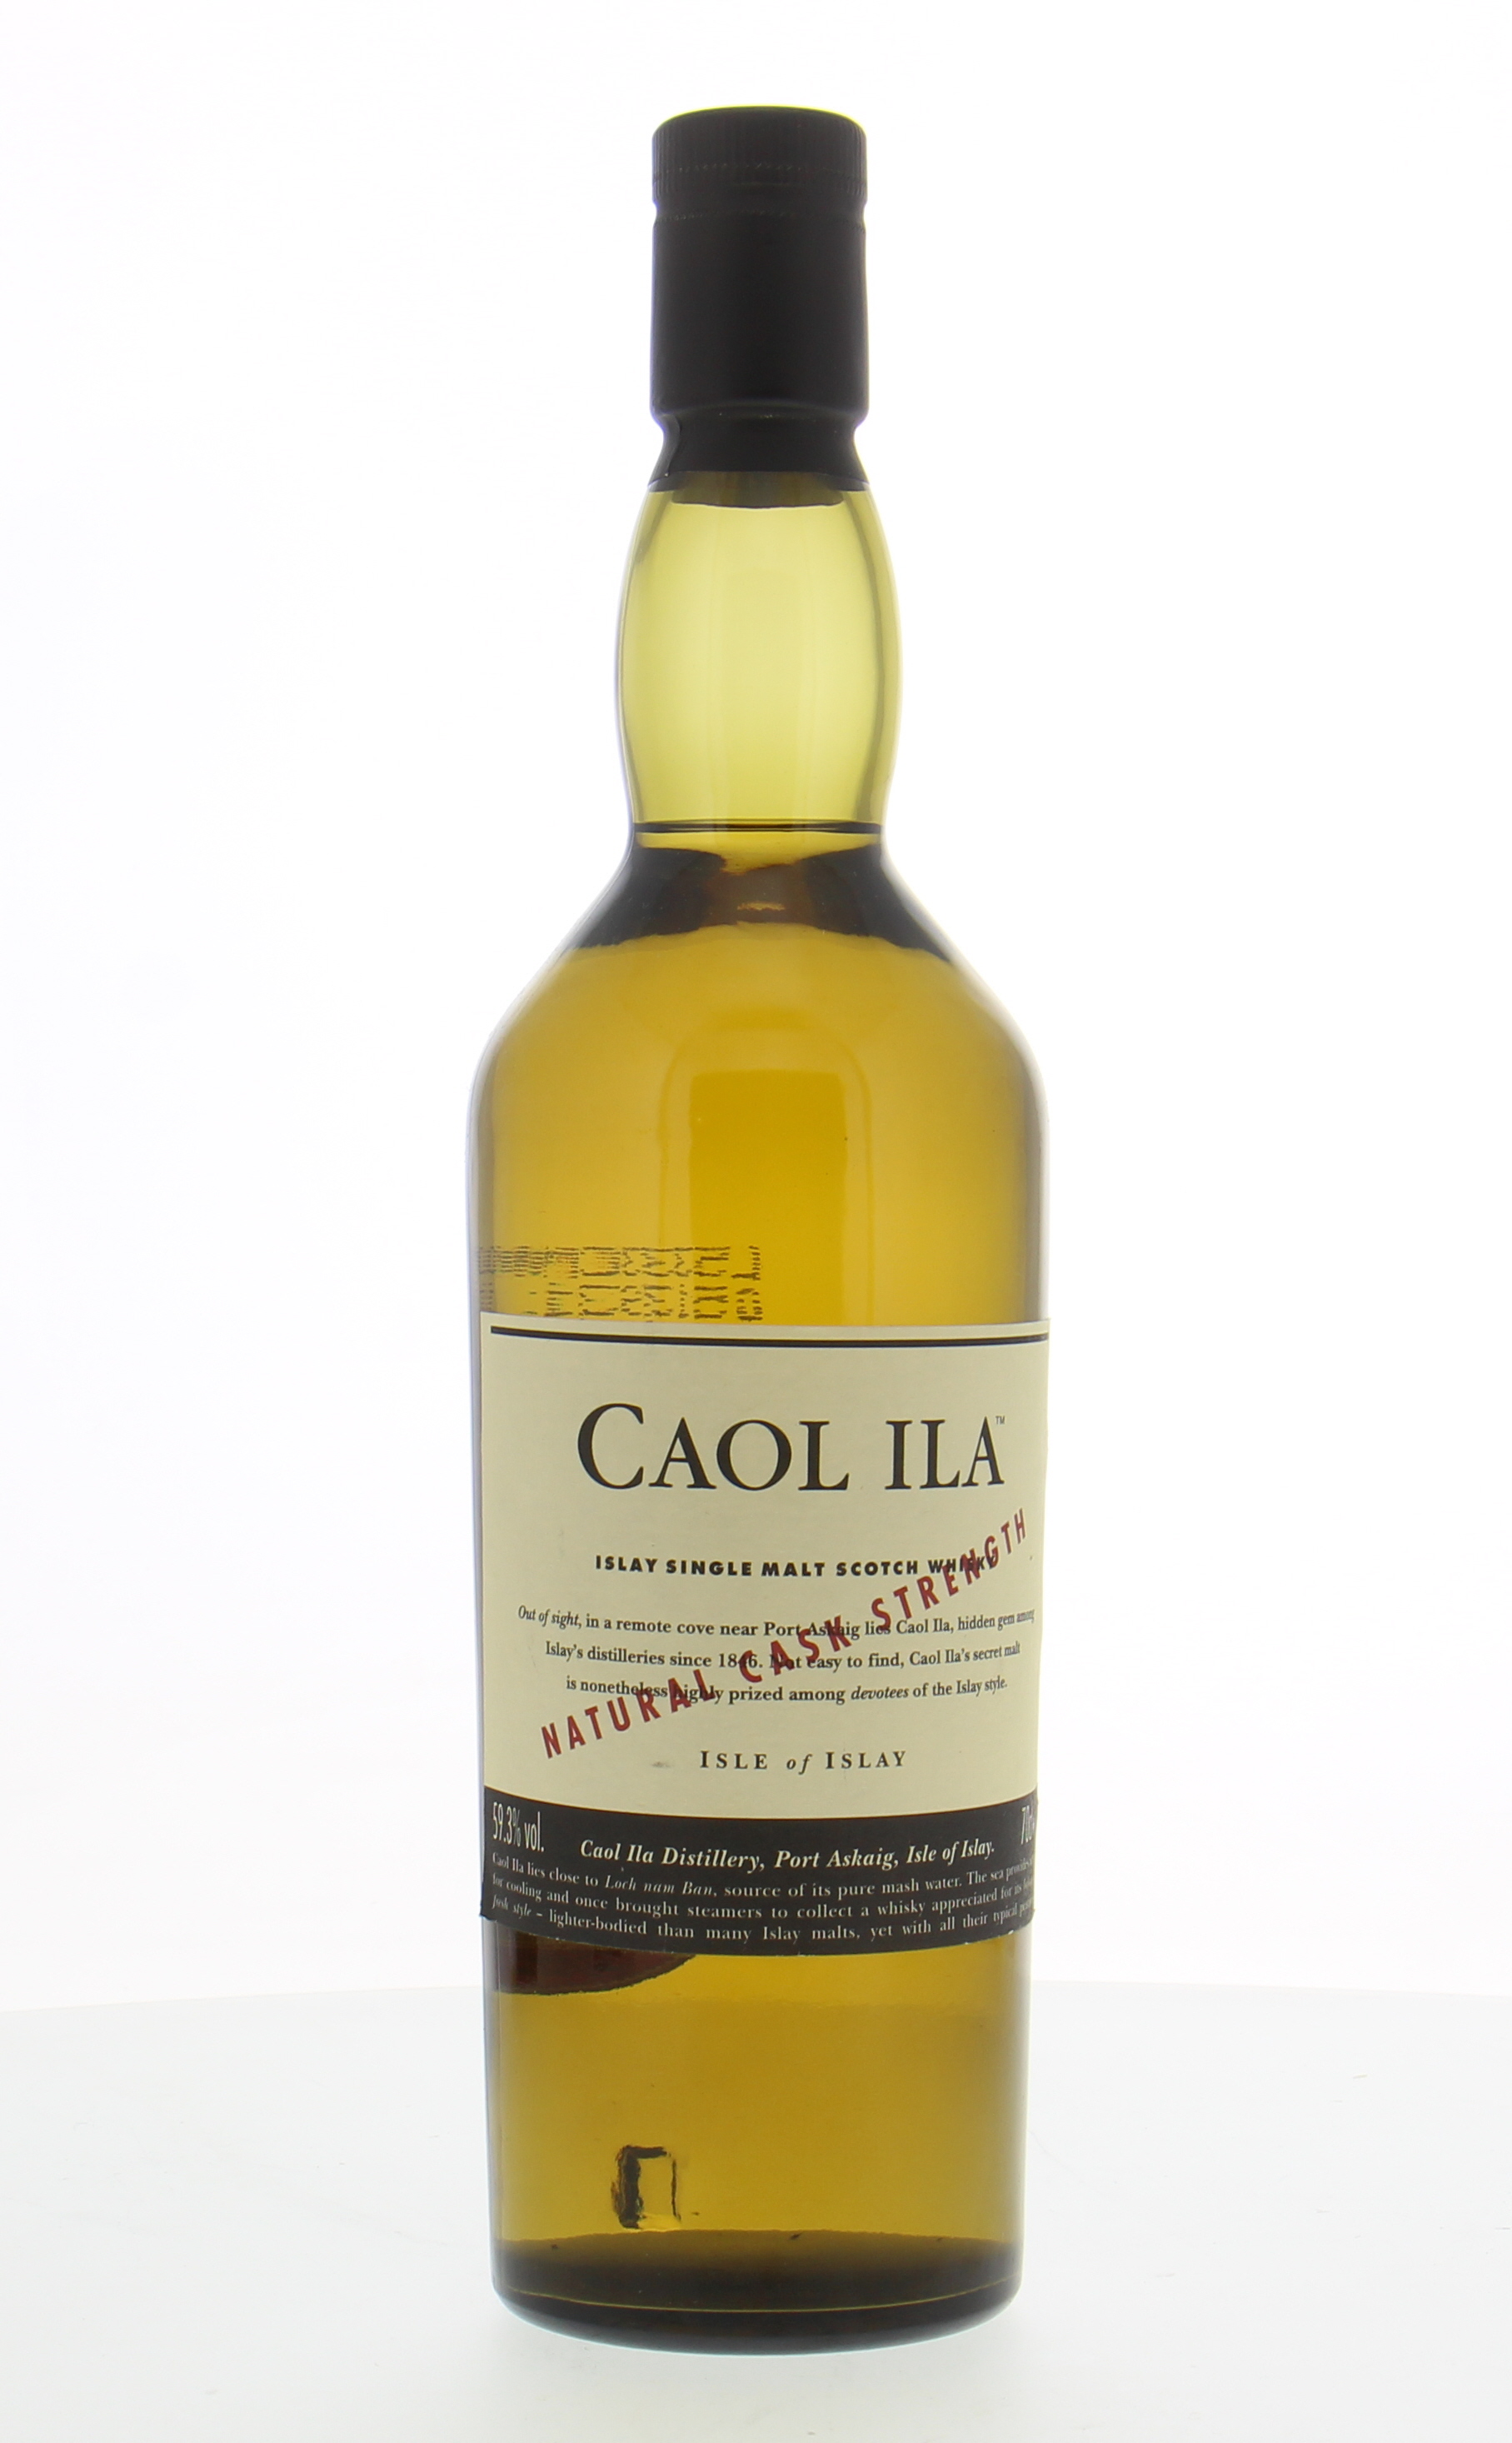 Caol Ila - Natural Cask Strength 2005 59.3% NV